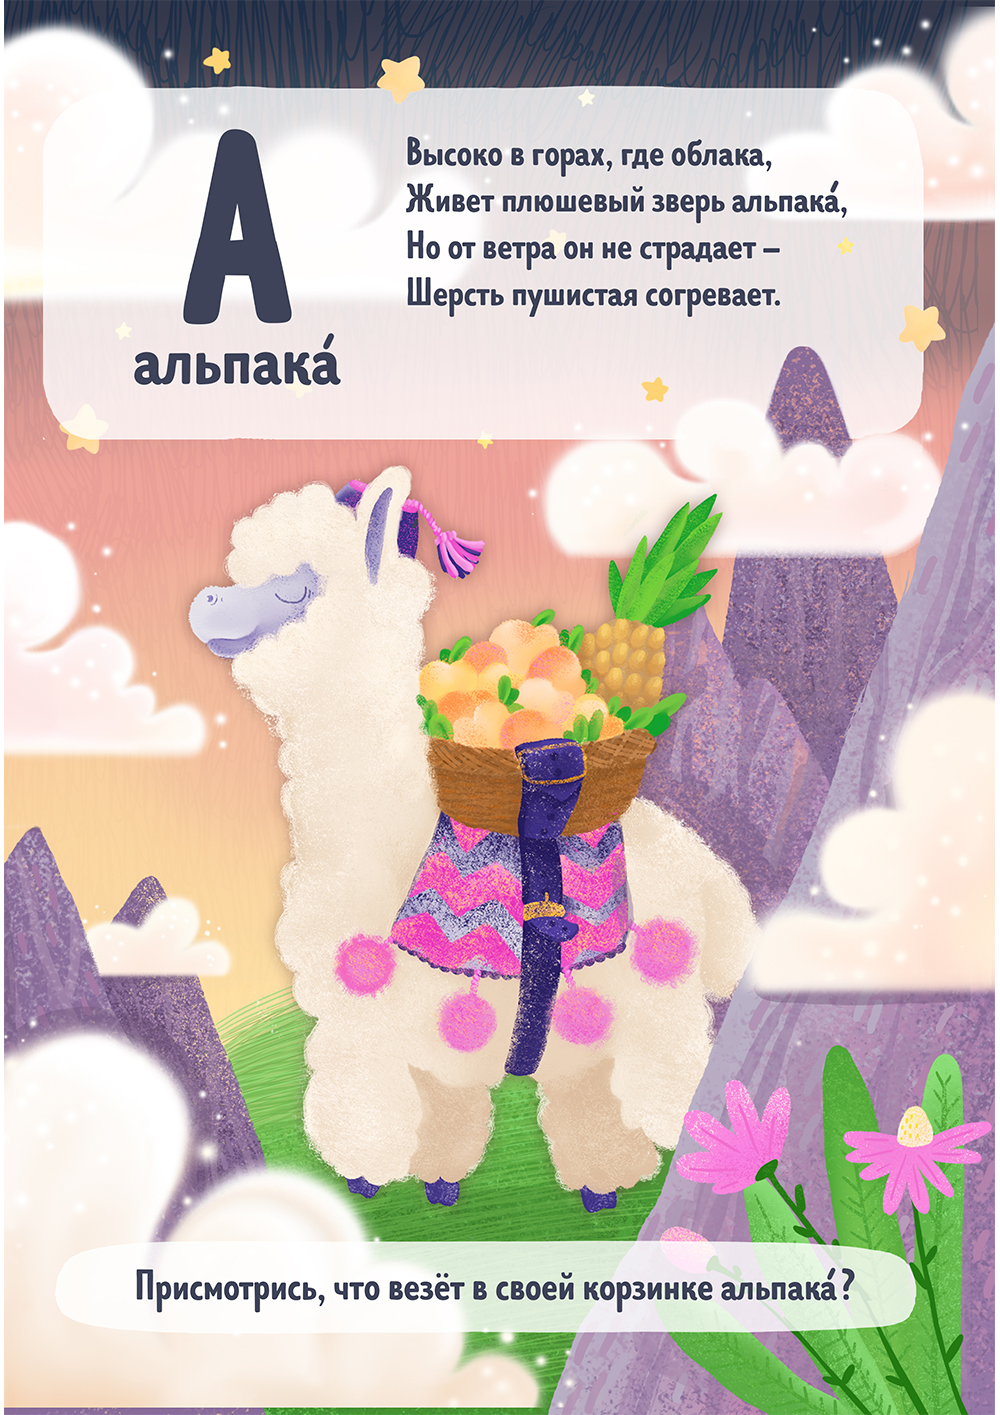 ABC alphabet book ILLUSTRATION  characters animals Picture book children book kids illustration children illustration